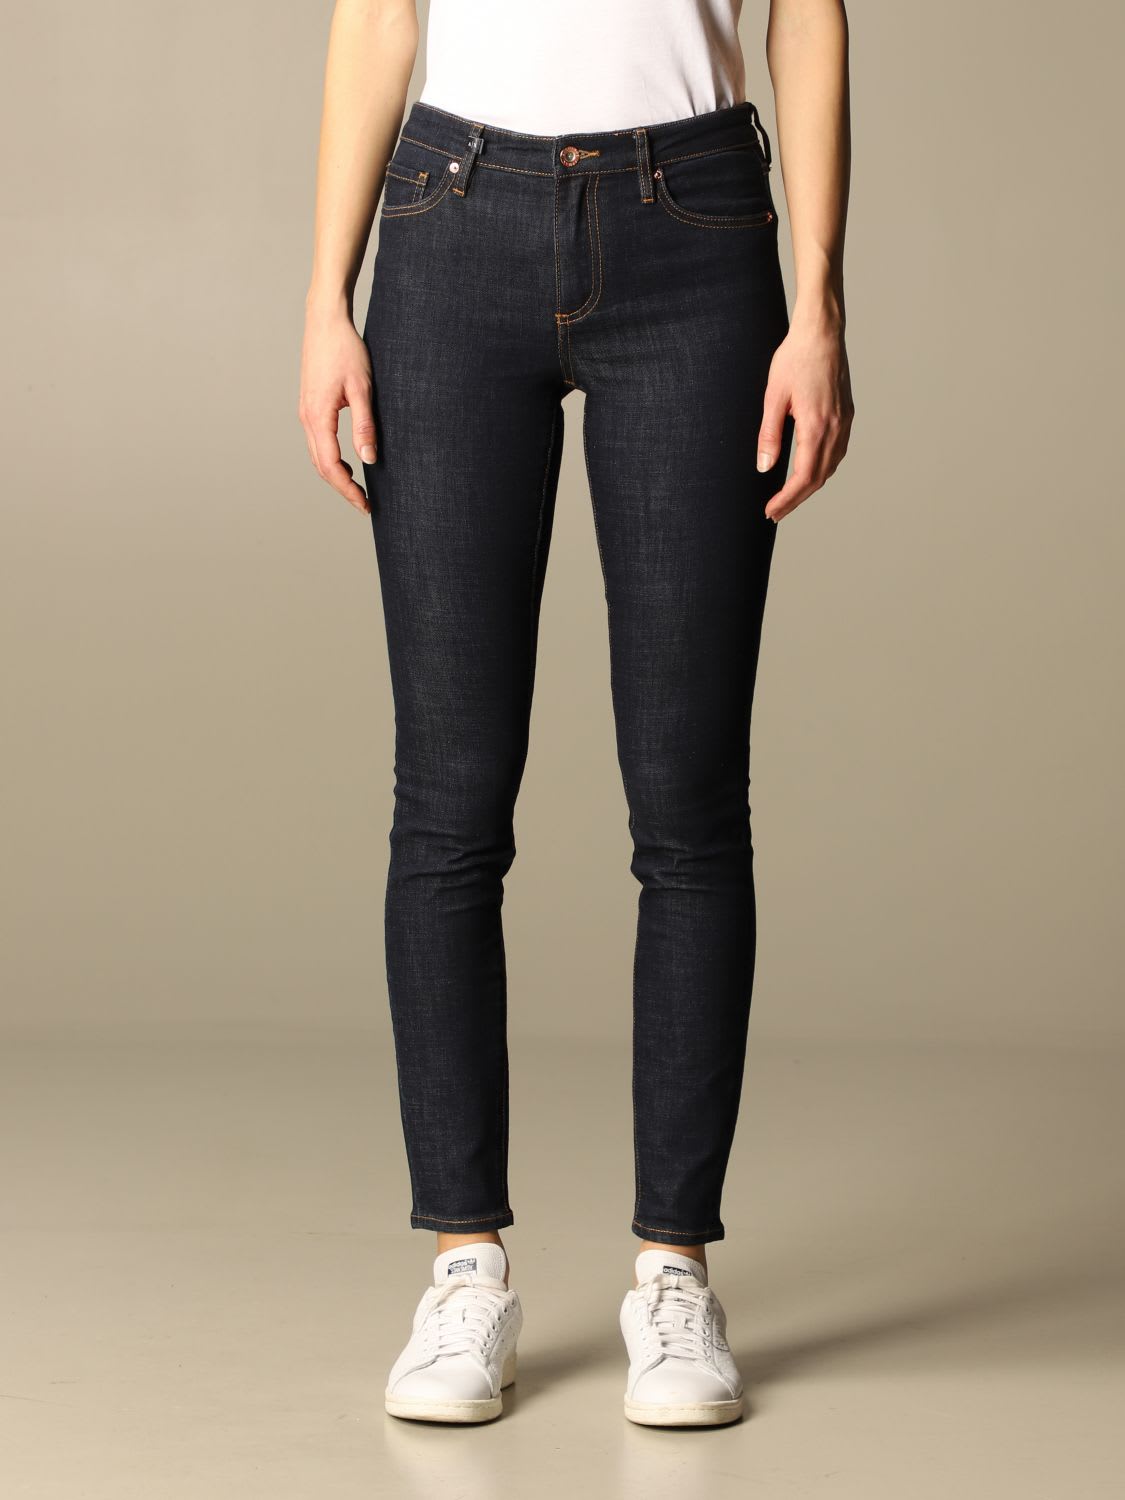 Armani Collezioni Armani Exchange Jeans Stretch Denim Regular Waist Skinny Leg